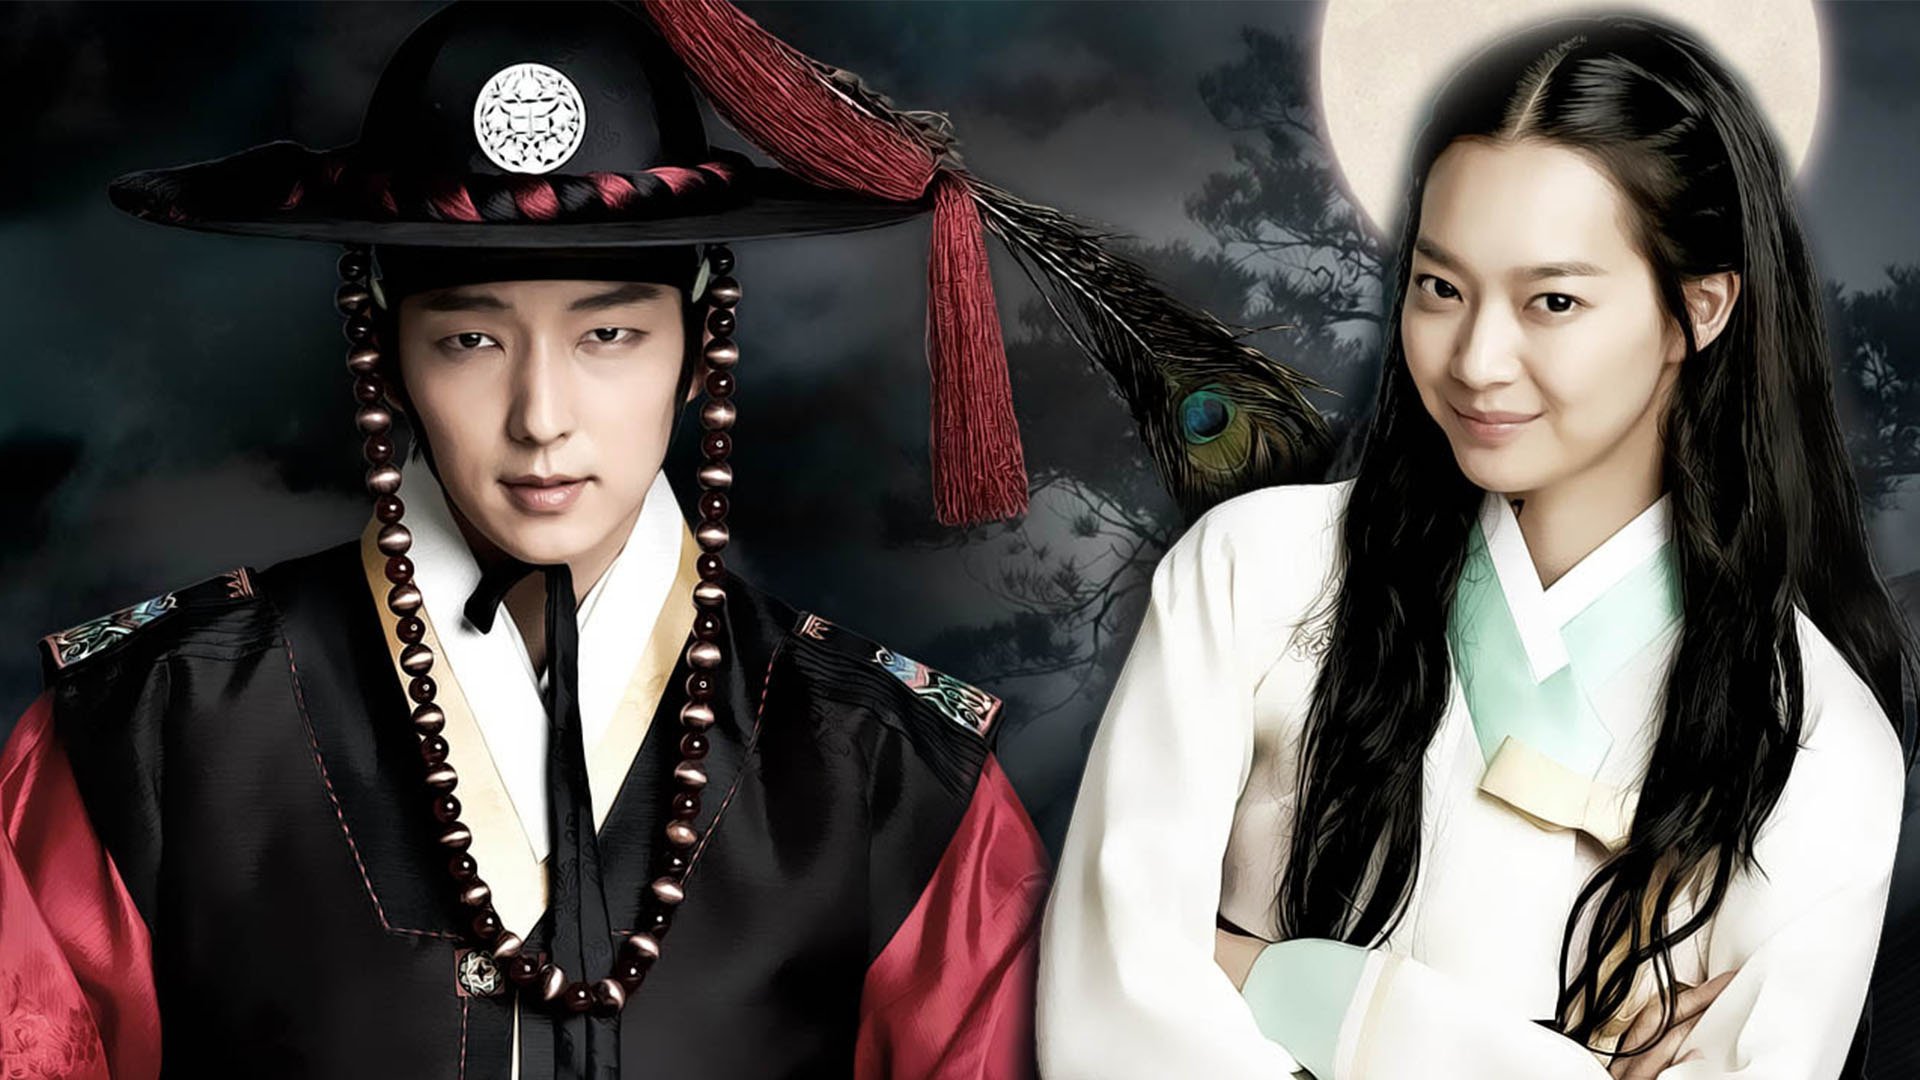 Shin Min-A and Lee Joon-Gi in 'Arang and the Magistrate' K-drama earring hanboks